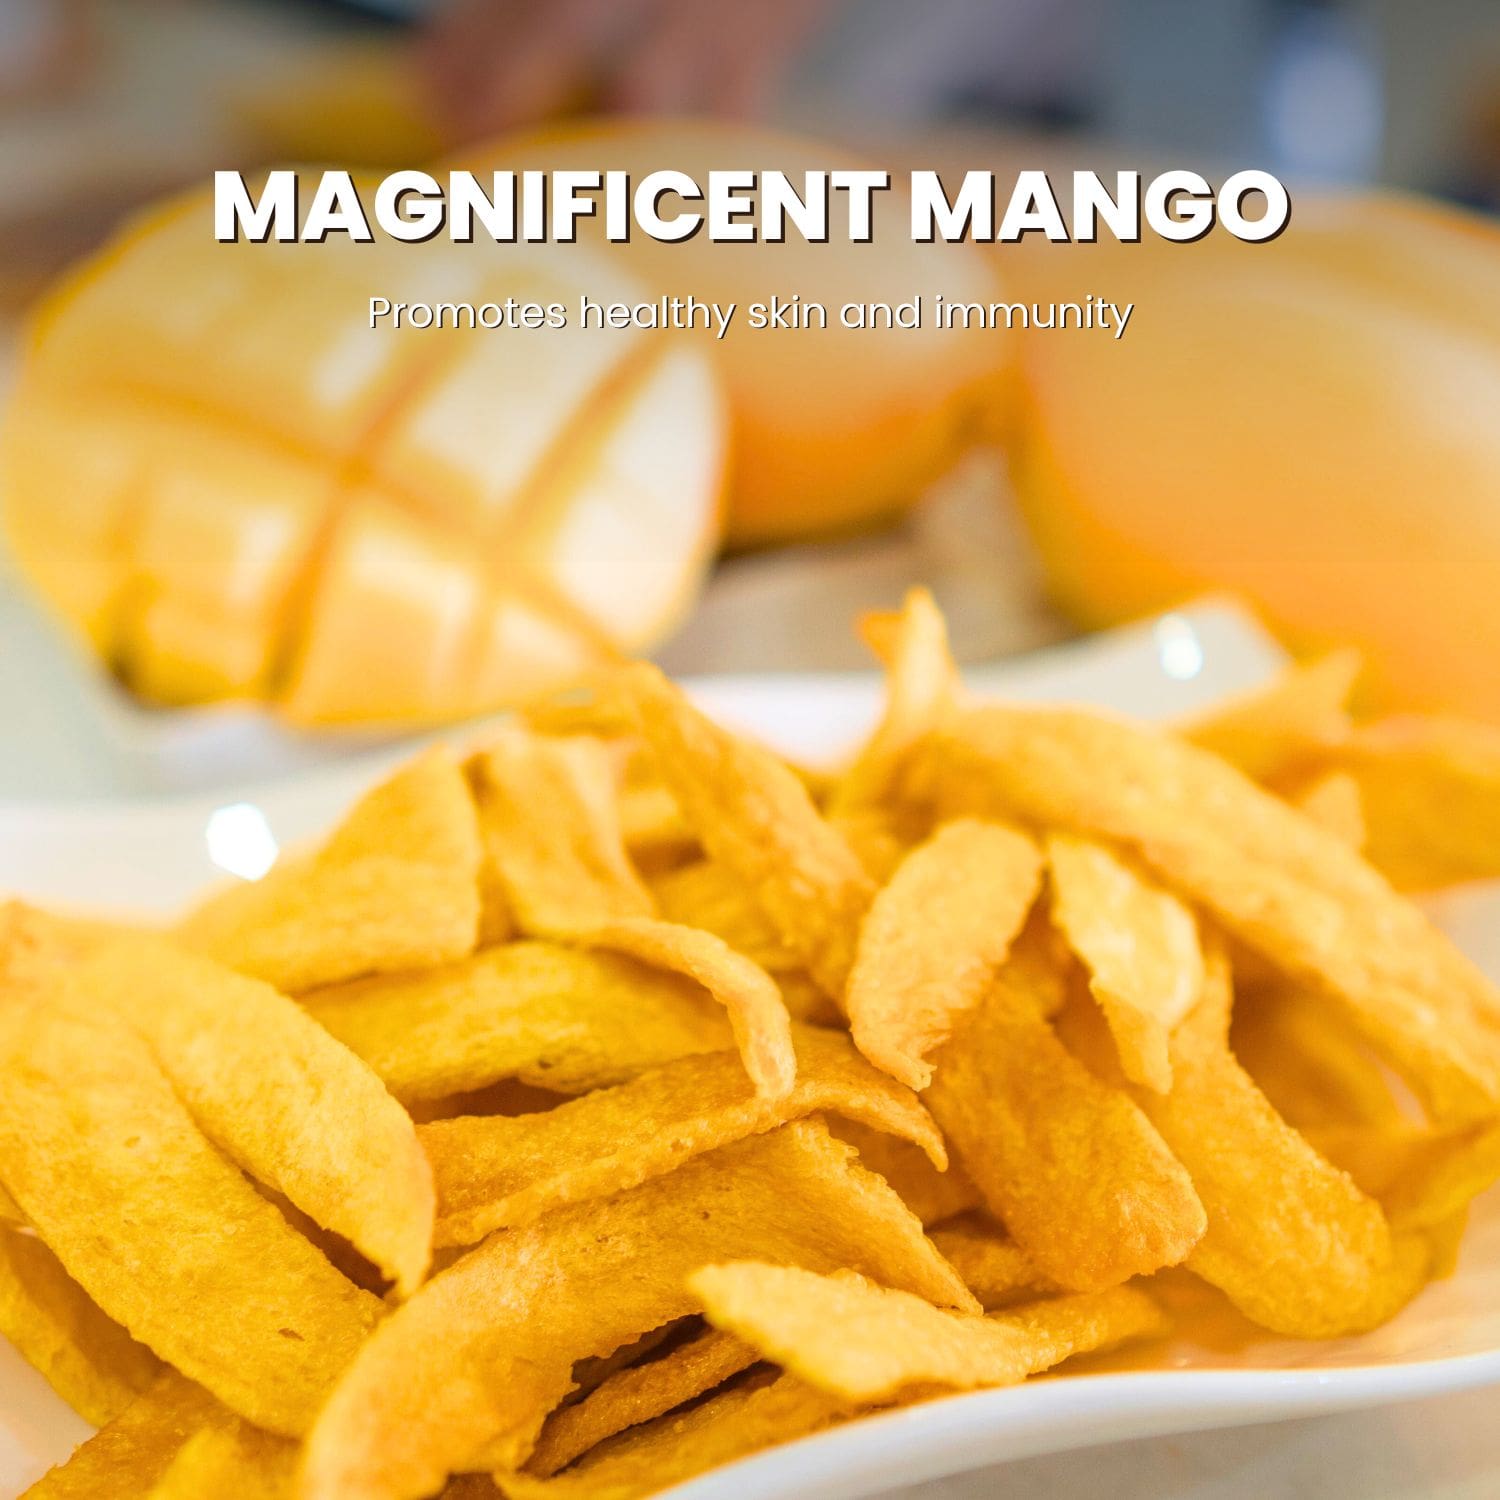 Mango Chips